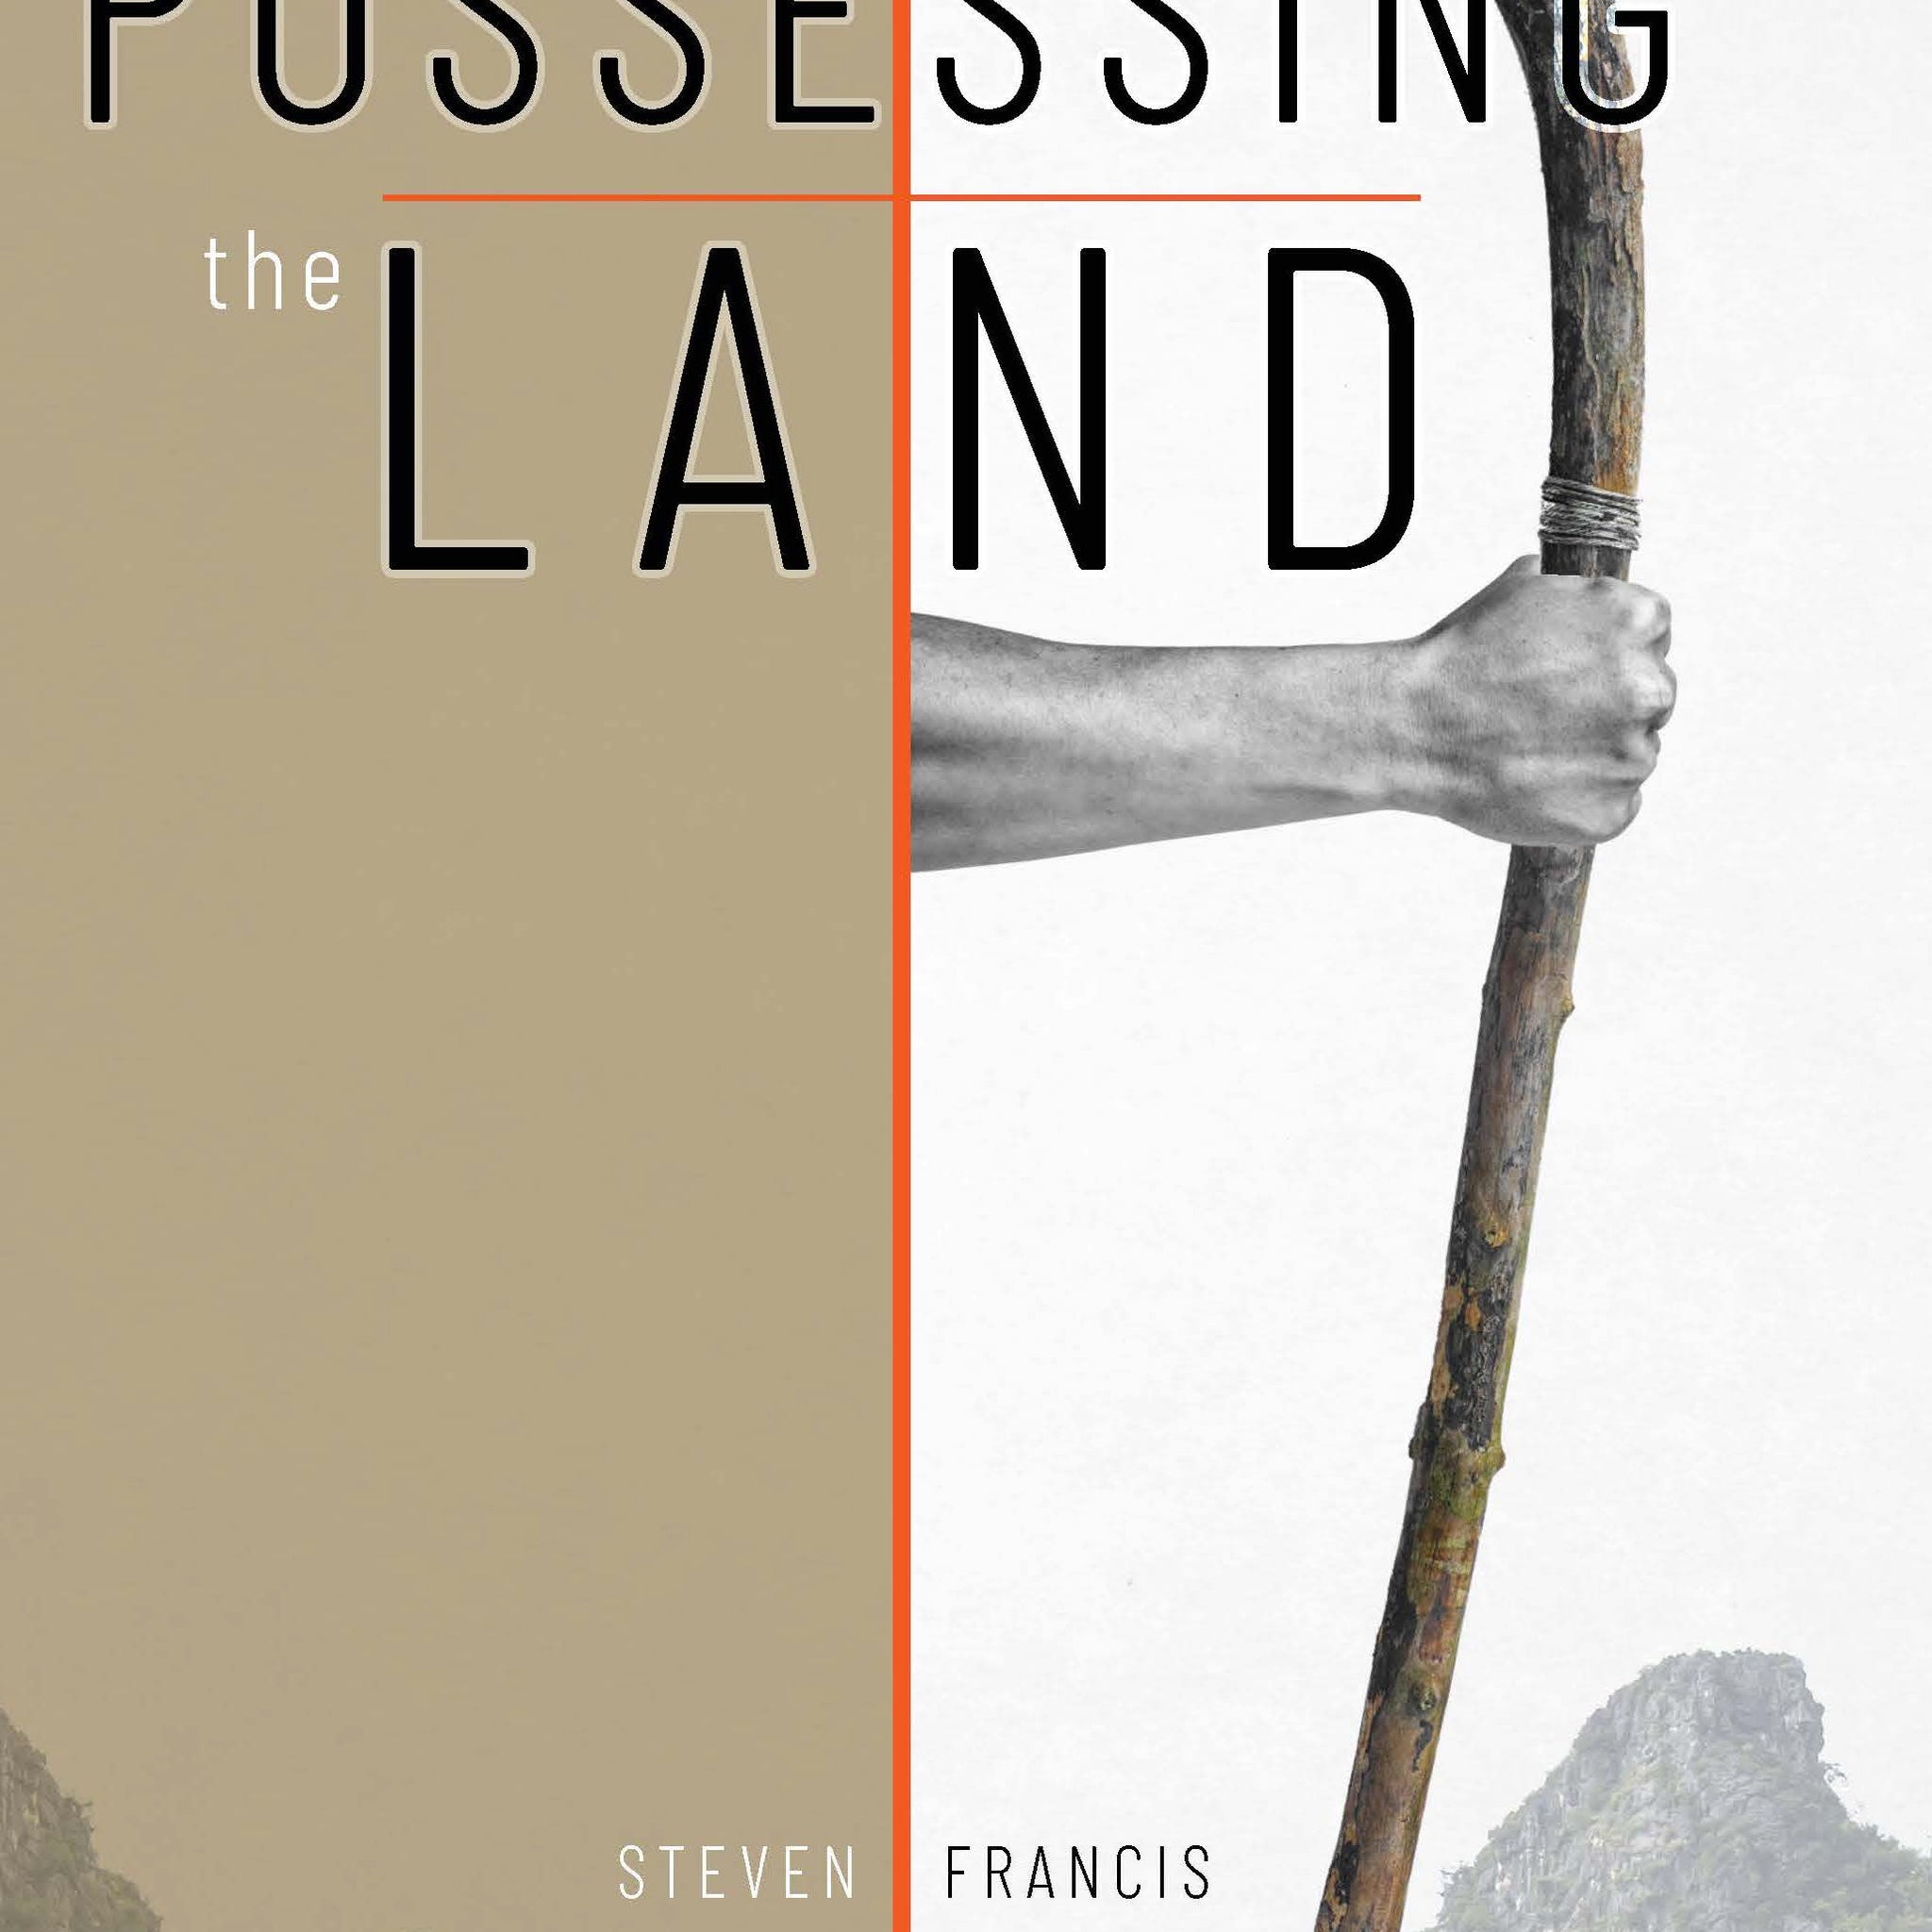 Possessing The Land (USB Audio) - Steven Francis Ministries 